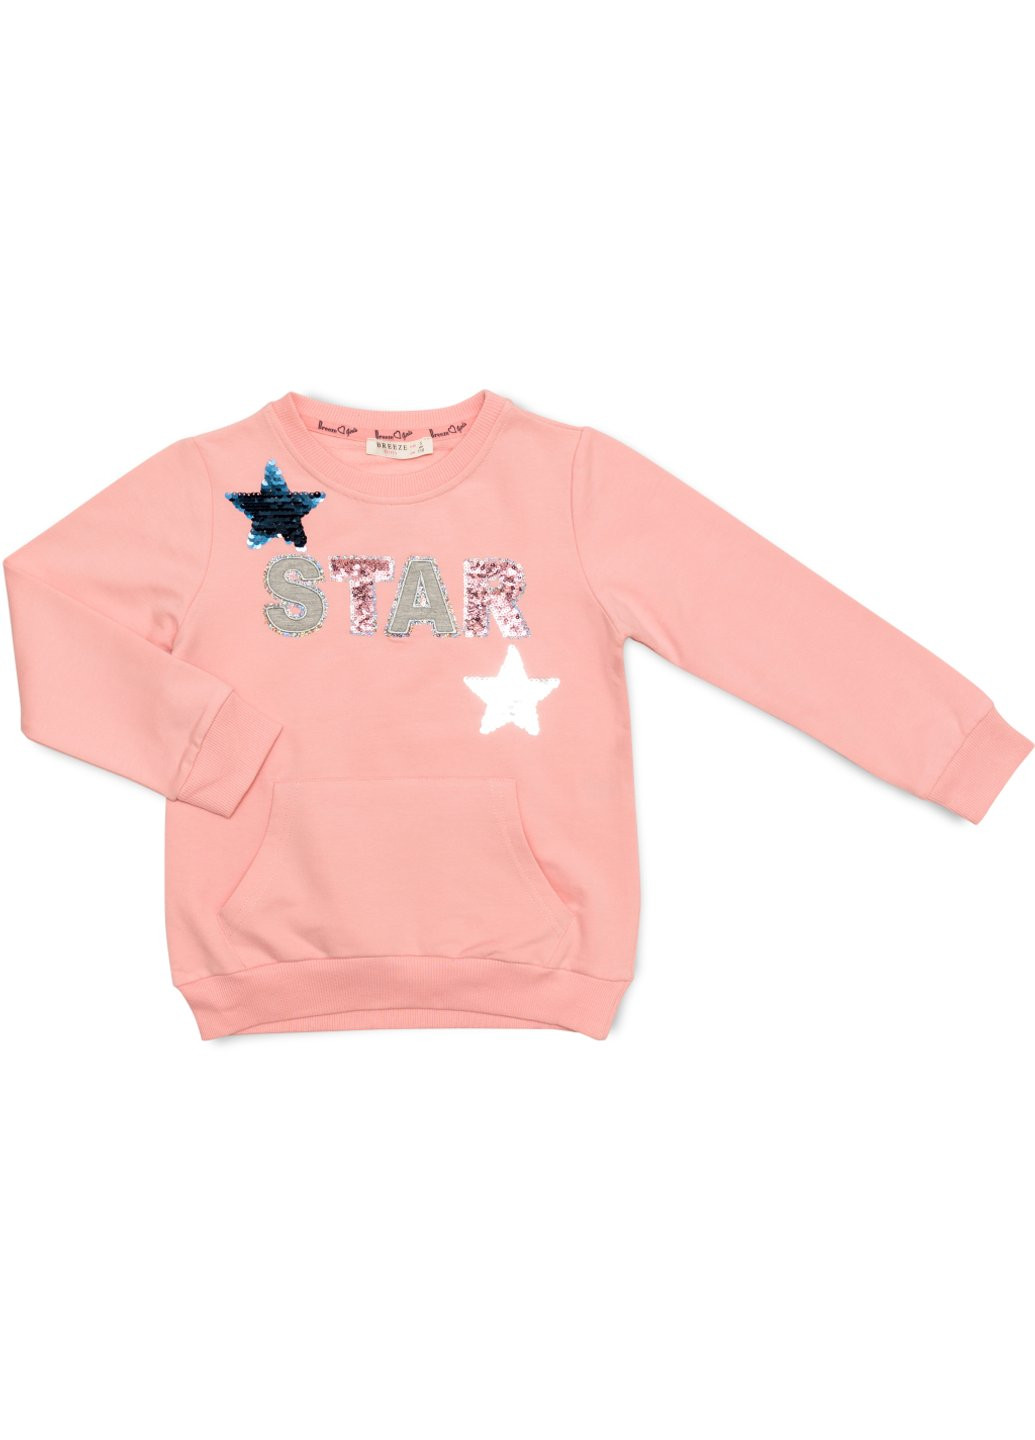 Спортивный костюм STAR (13727-110G-pink) Breeze (257205889)